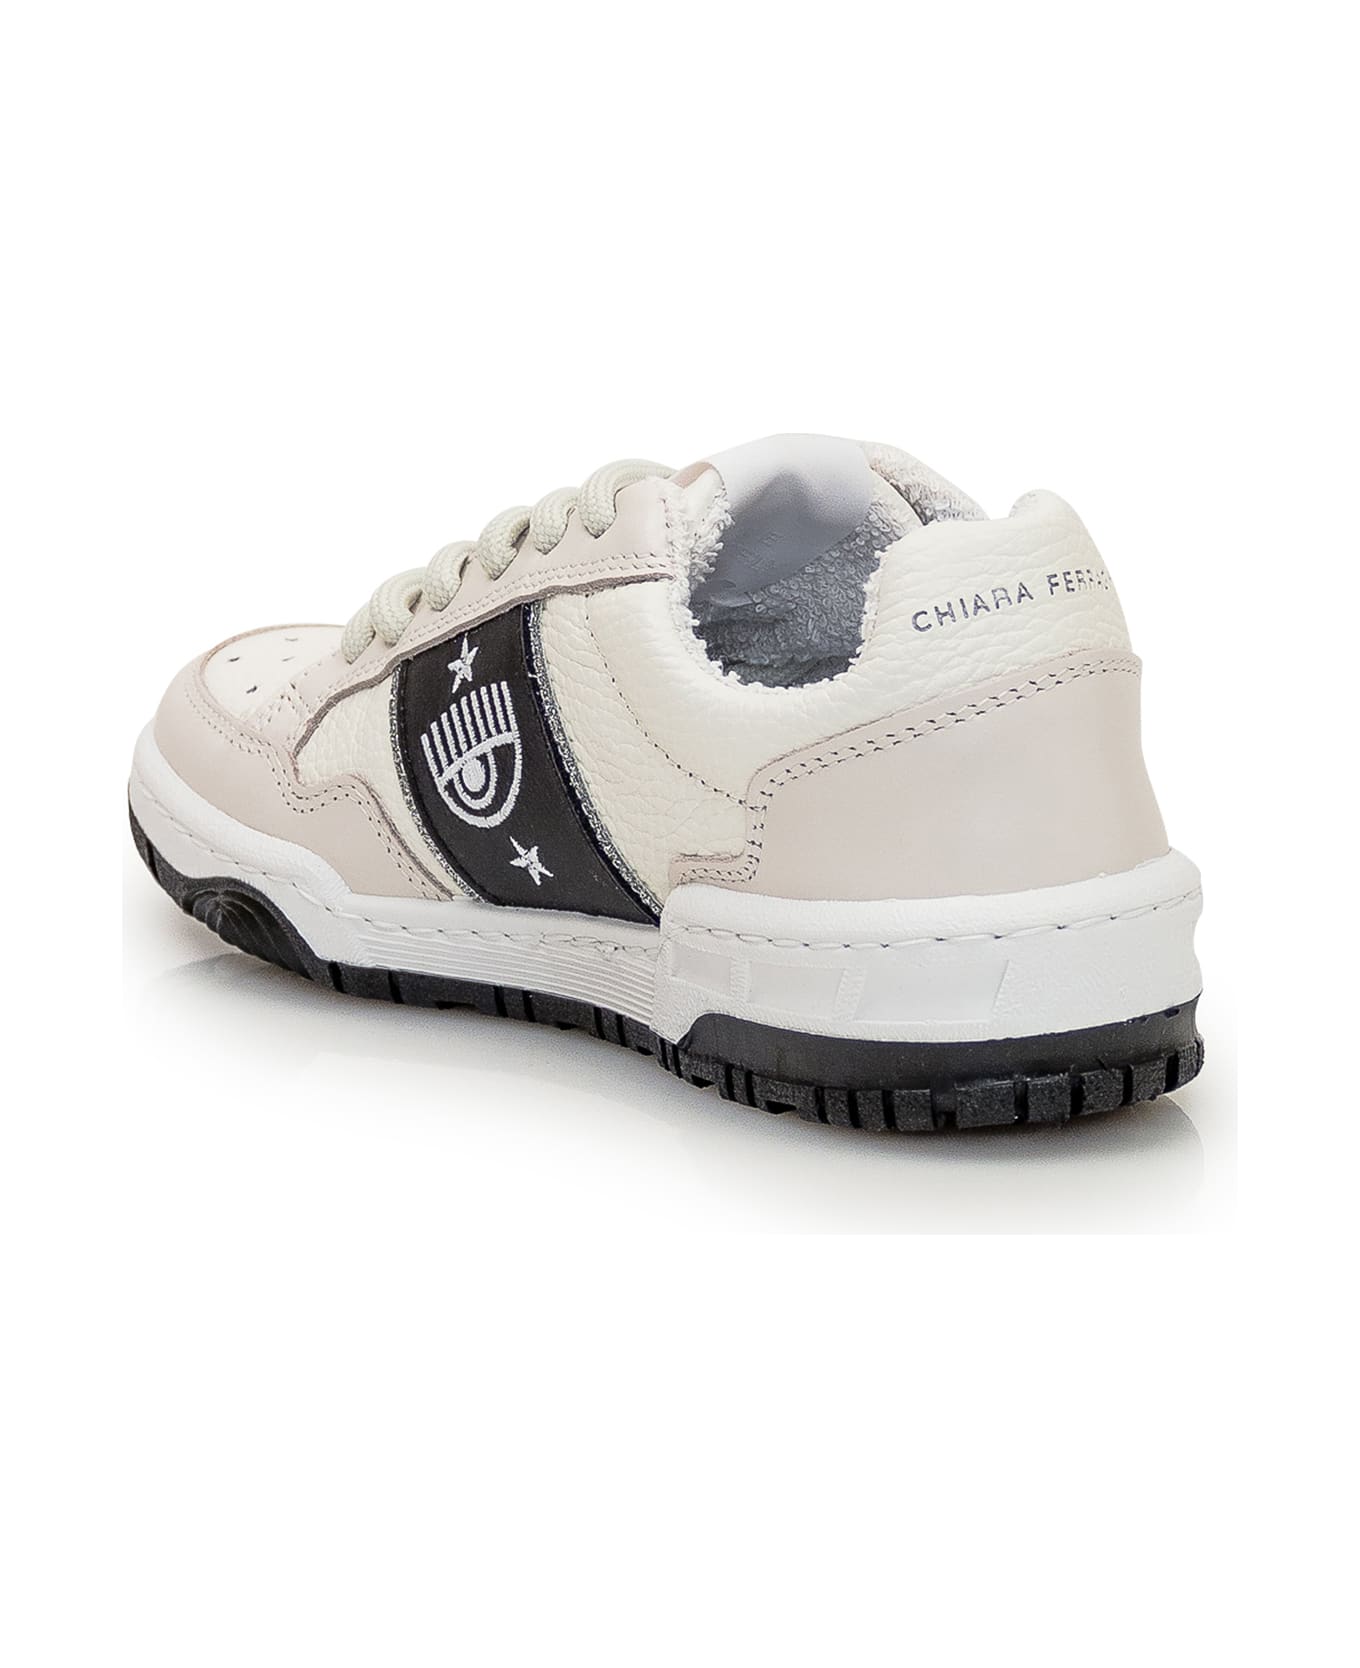 Chiara Ferragni Cf-1 Sneaker - WHITE-BLACK